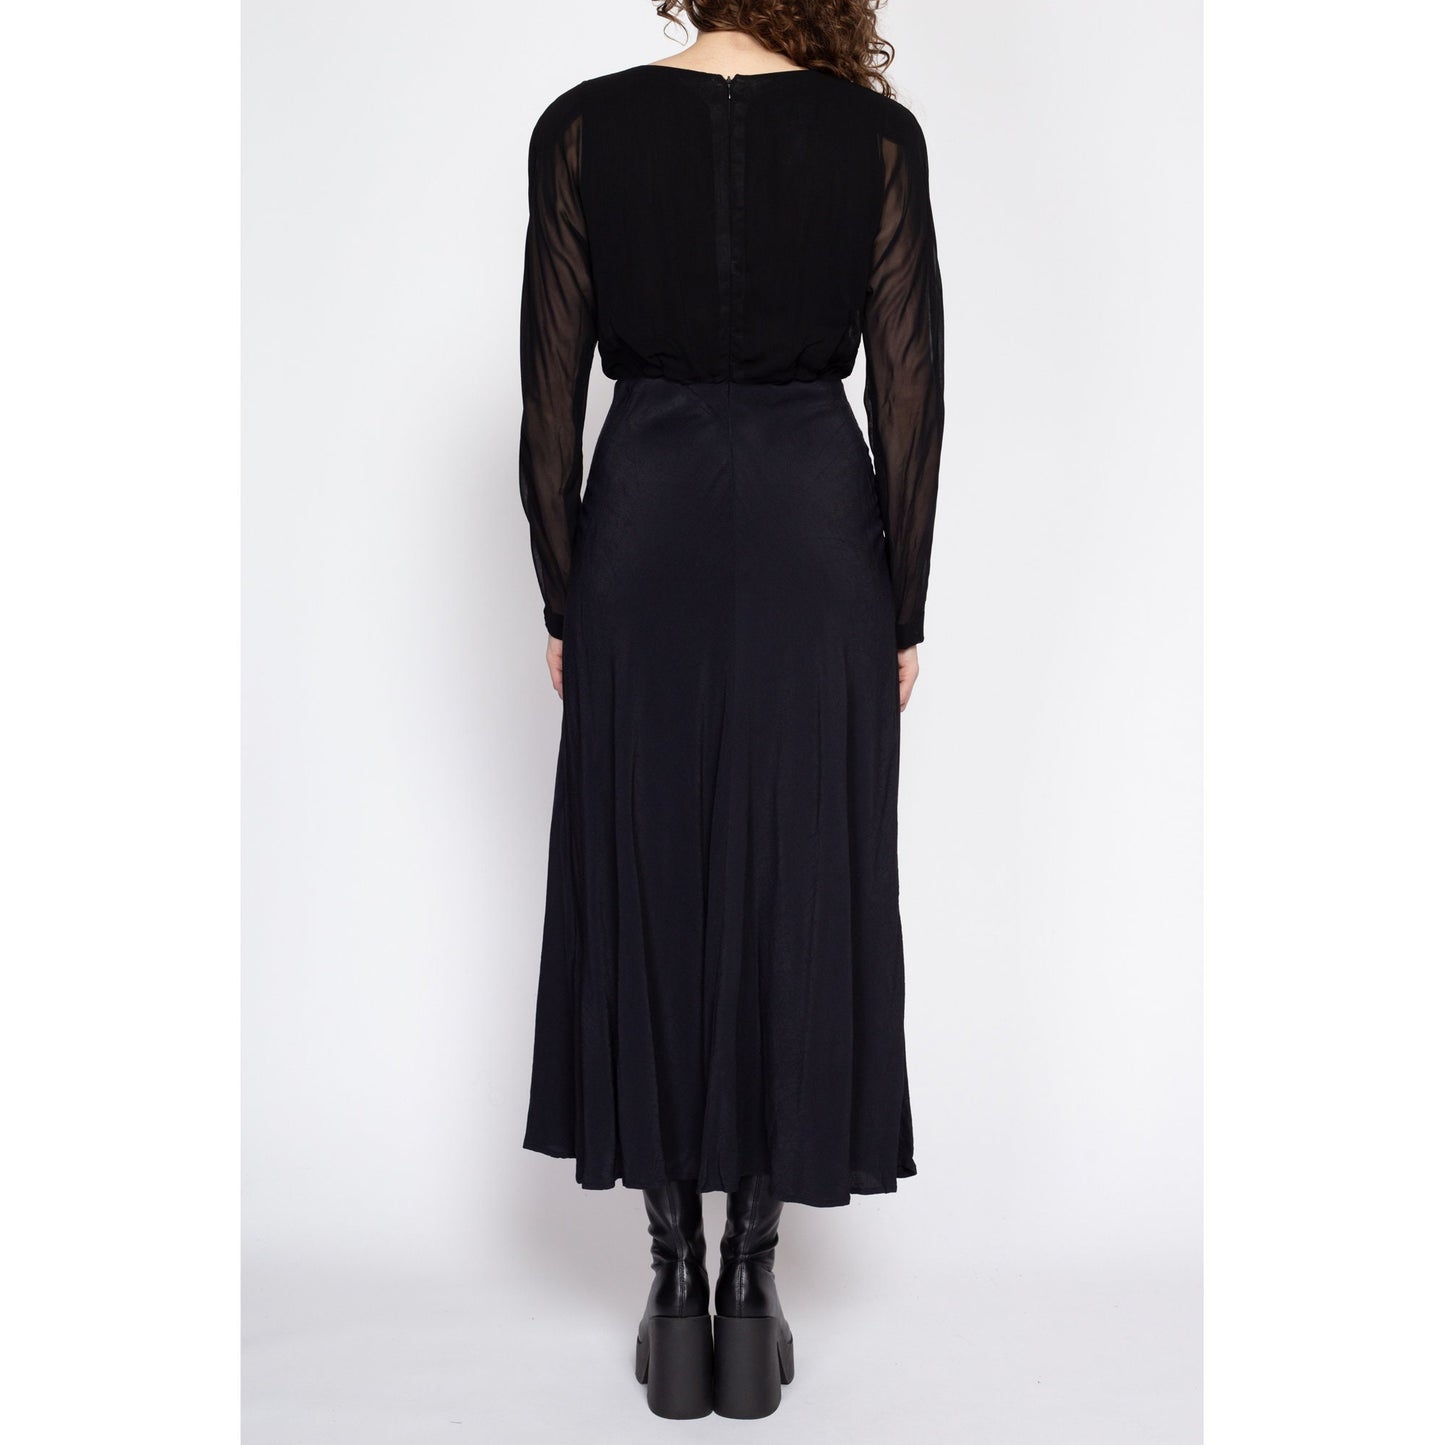 Medium 90s Black Bias Cut Maxi Dress | Vintage Gothic Minimalist Sheer Sleeve V Neck Dress